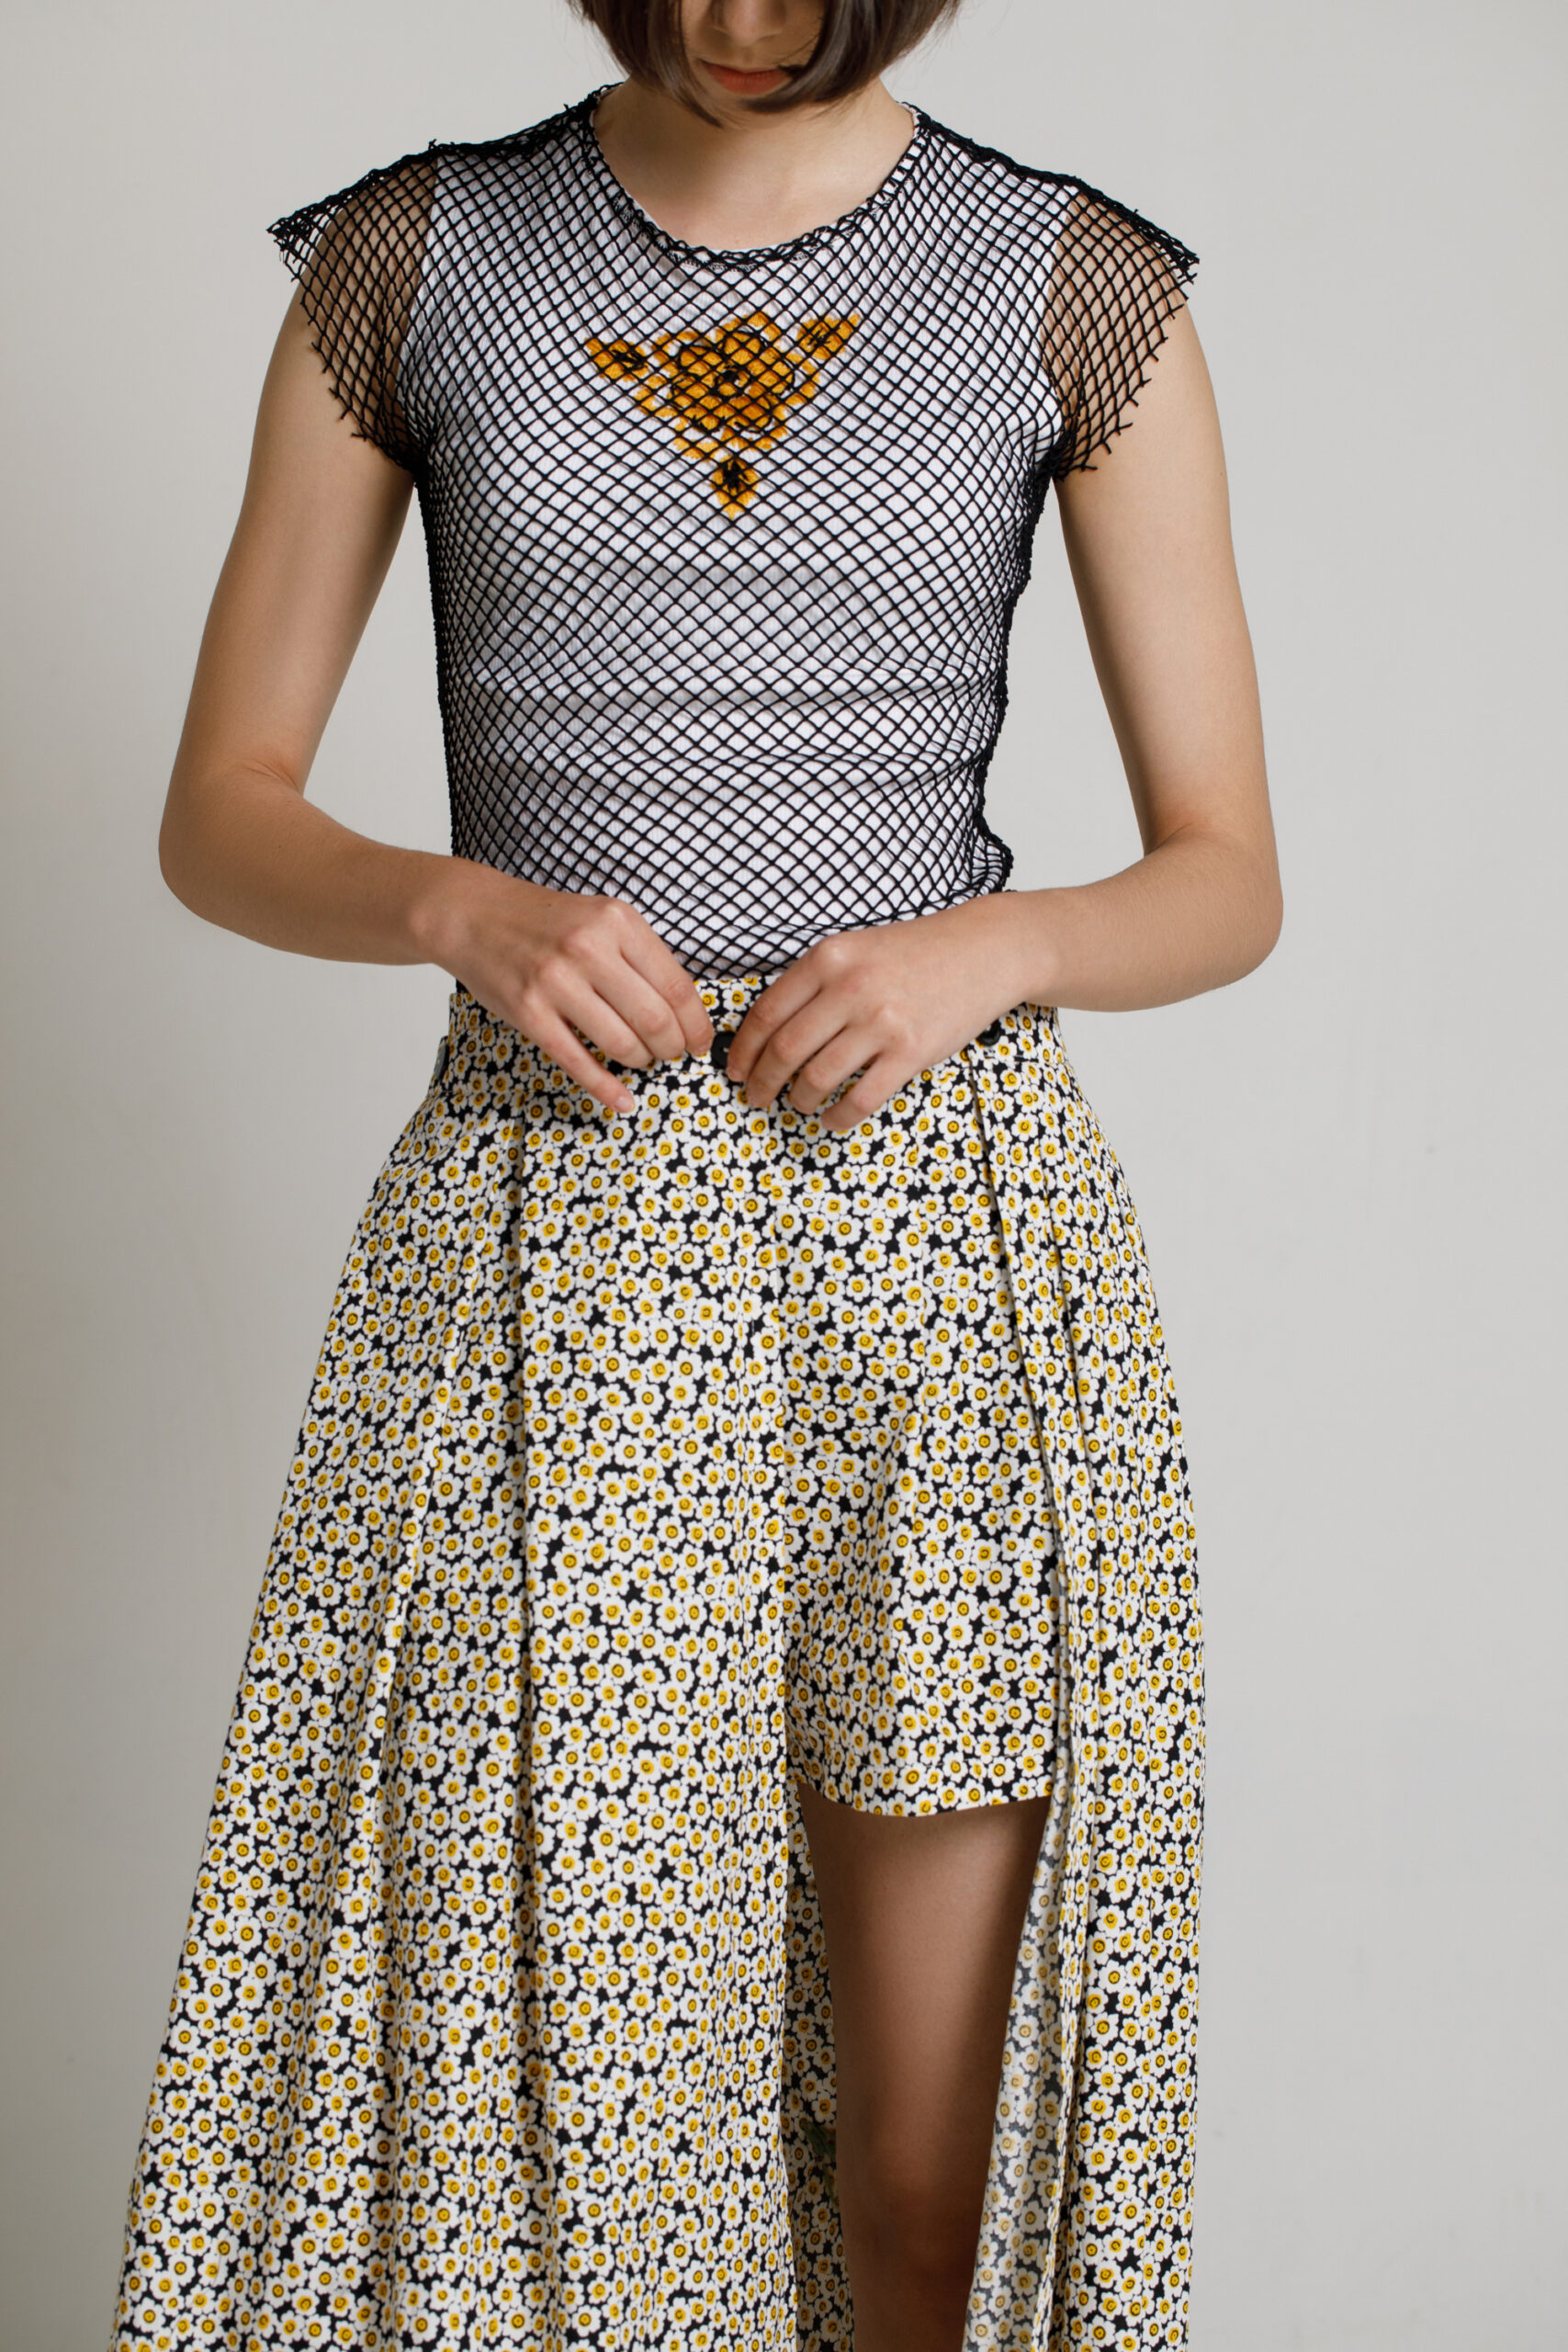 AMENA casual detachable skirt with short pants. Natural fabrics, original design, handmade embroidery